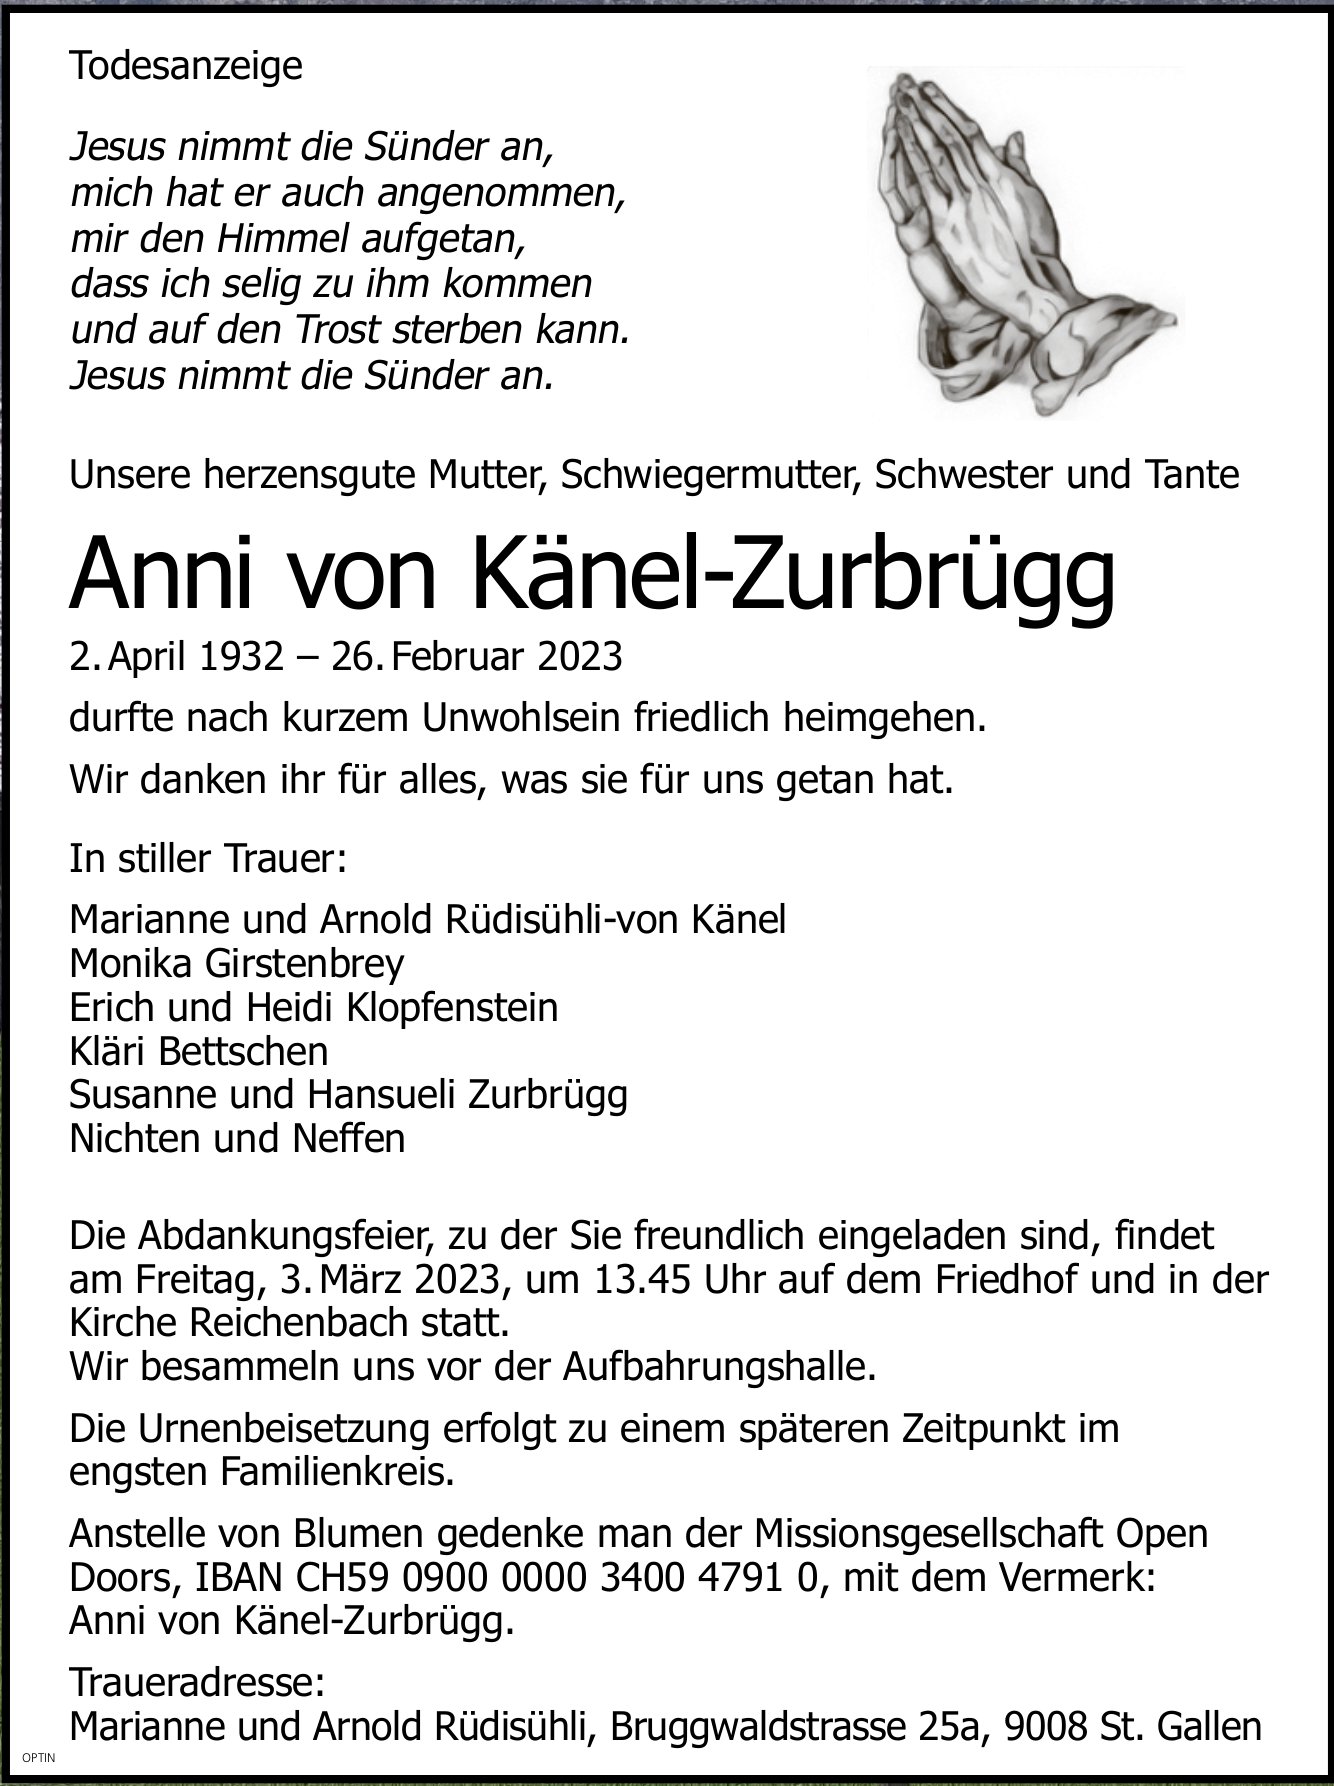 Anni von Känel-Zurbrügg, Februar 2023 / TA